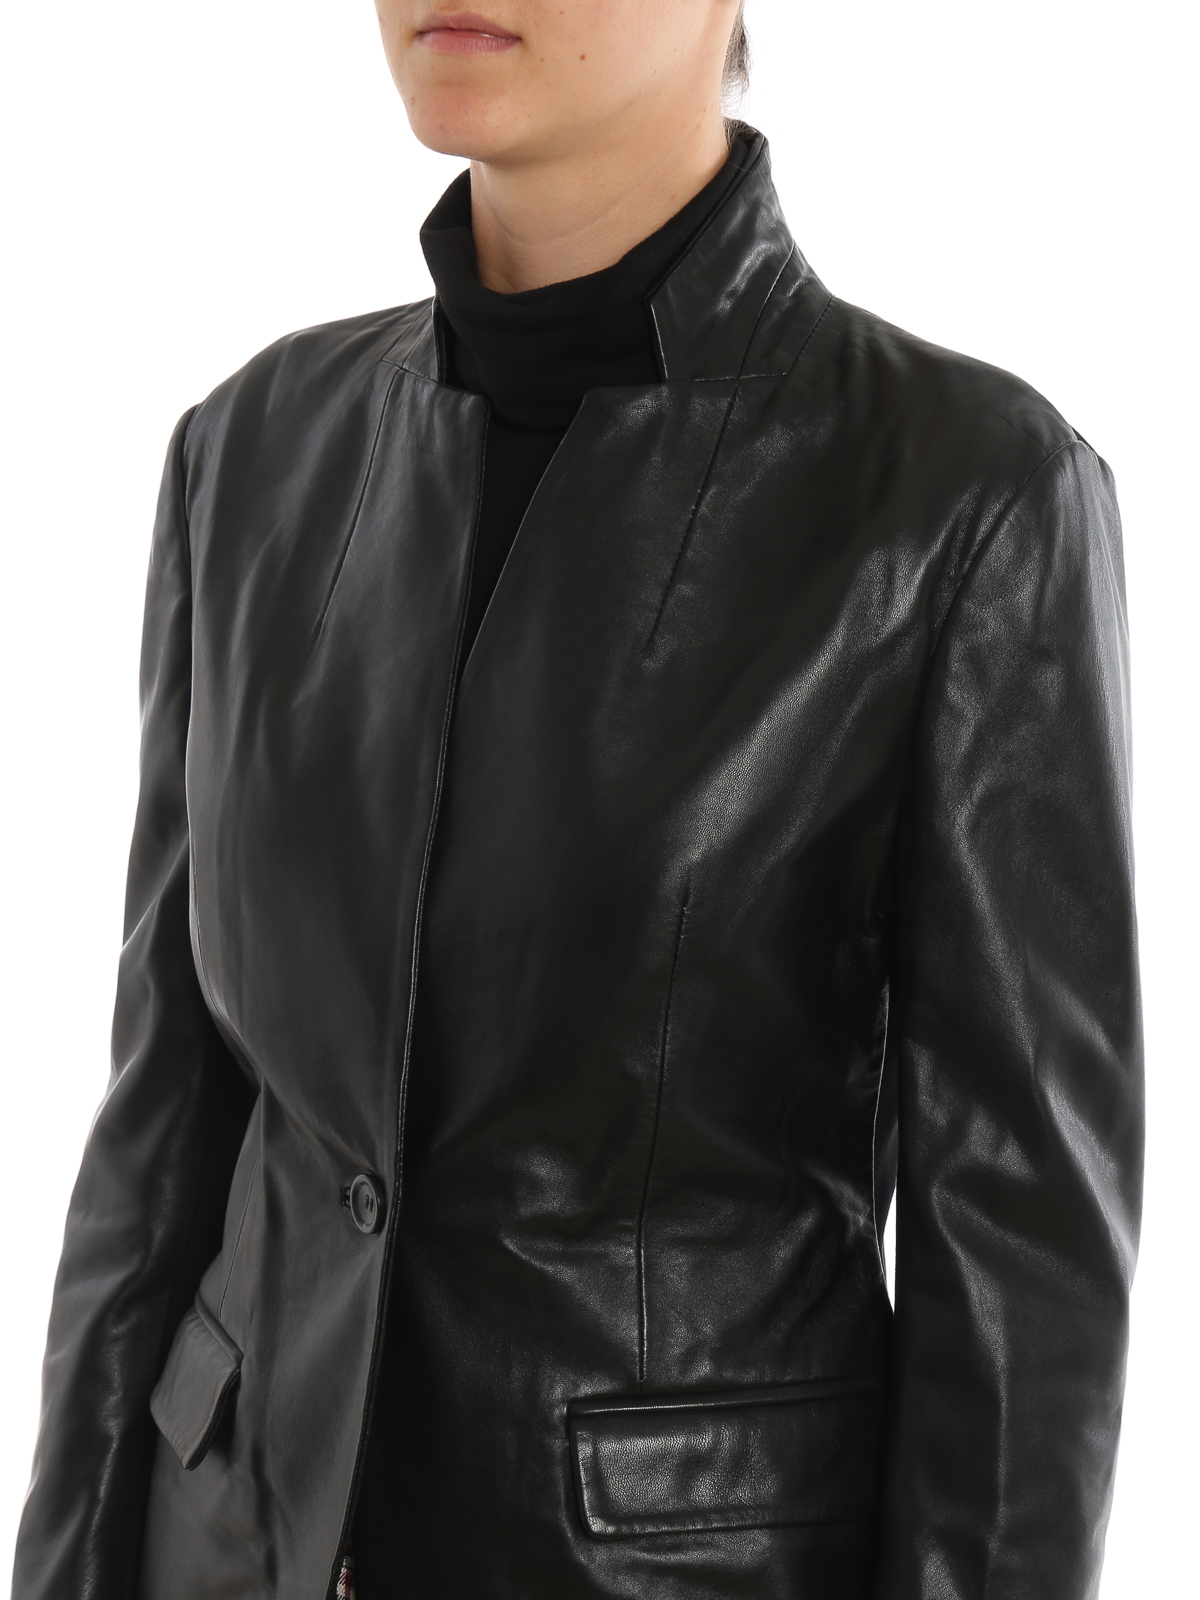 Leather jacket P.A.R.O.S.H. - Maze leather jacket - MAZED430758013